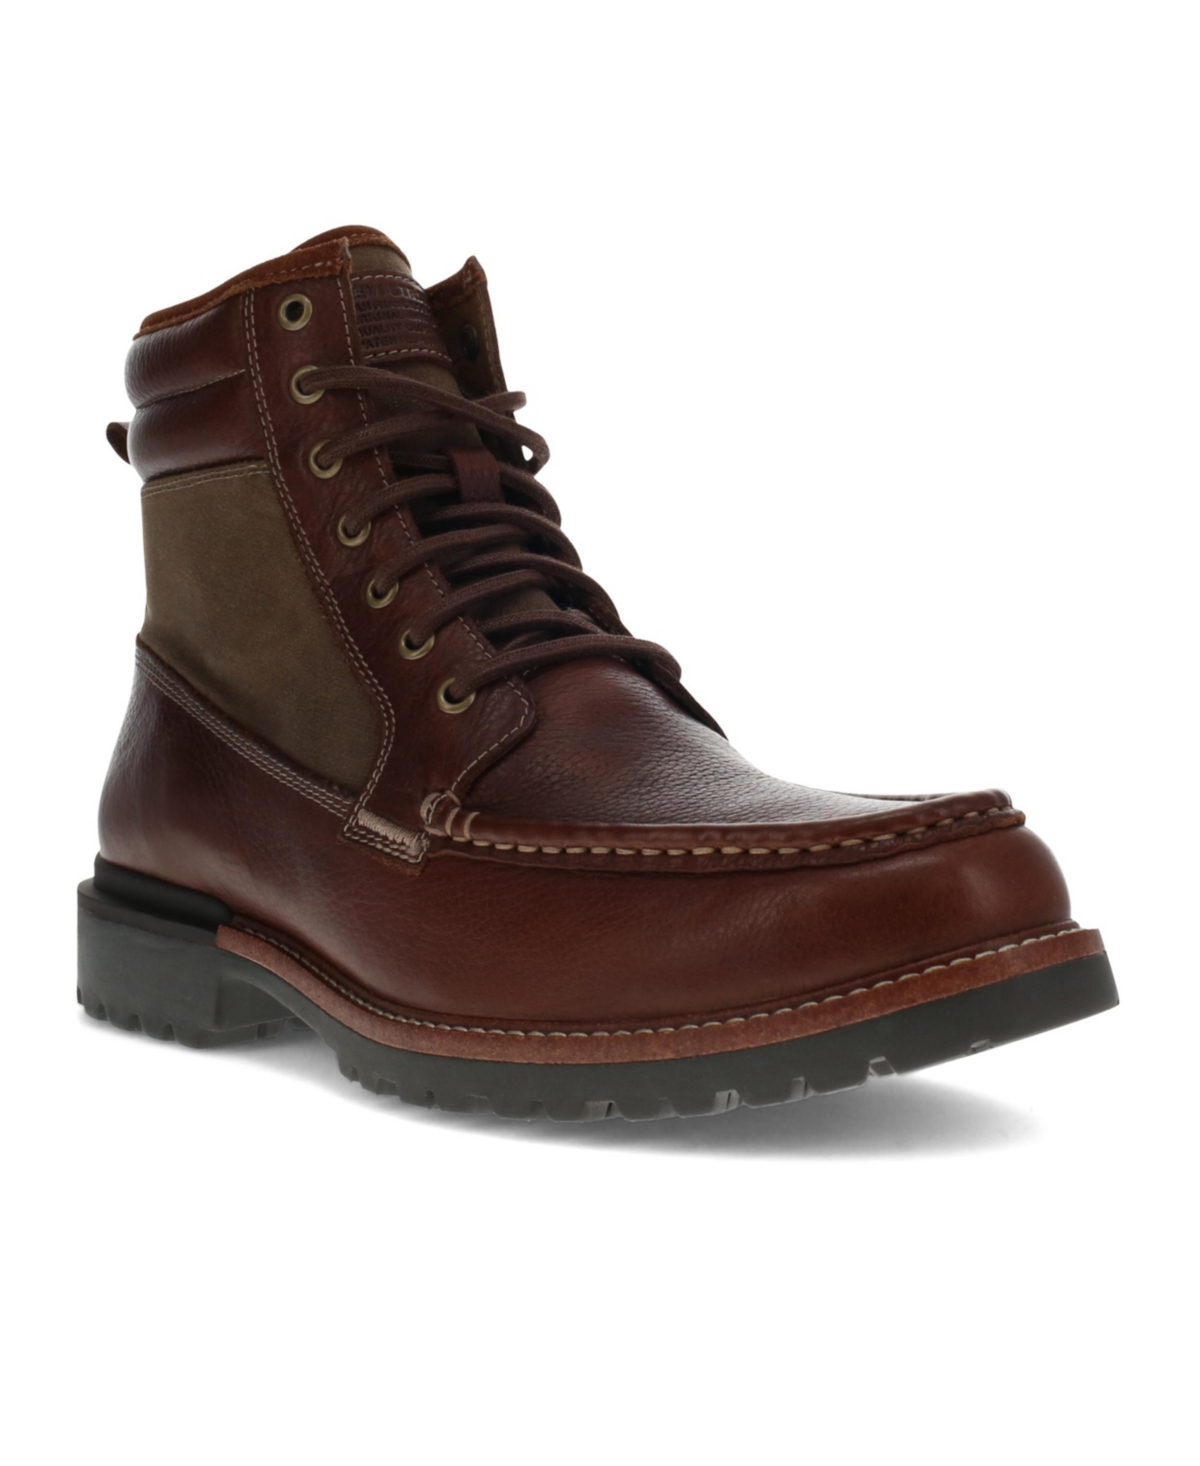 Men's Pelham Neo Lace-Up Boots - Dark Brown